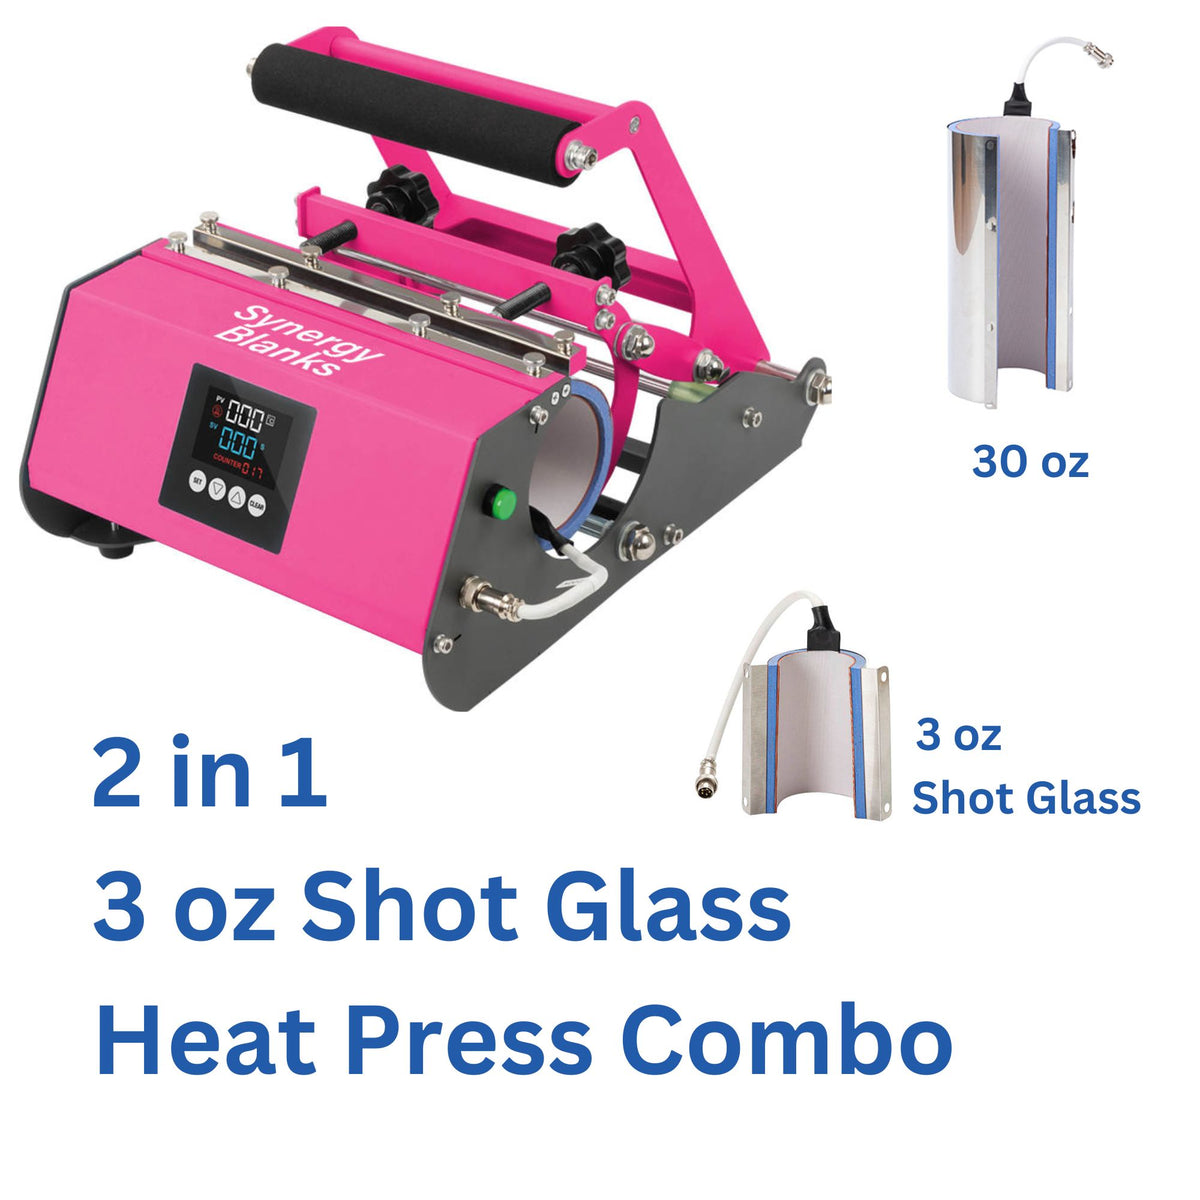 Synergy Blanks 3 oz Shot Glass & 20, 30, 16 oz Tumbler Heat Press - Bright Pink